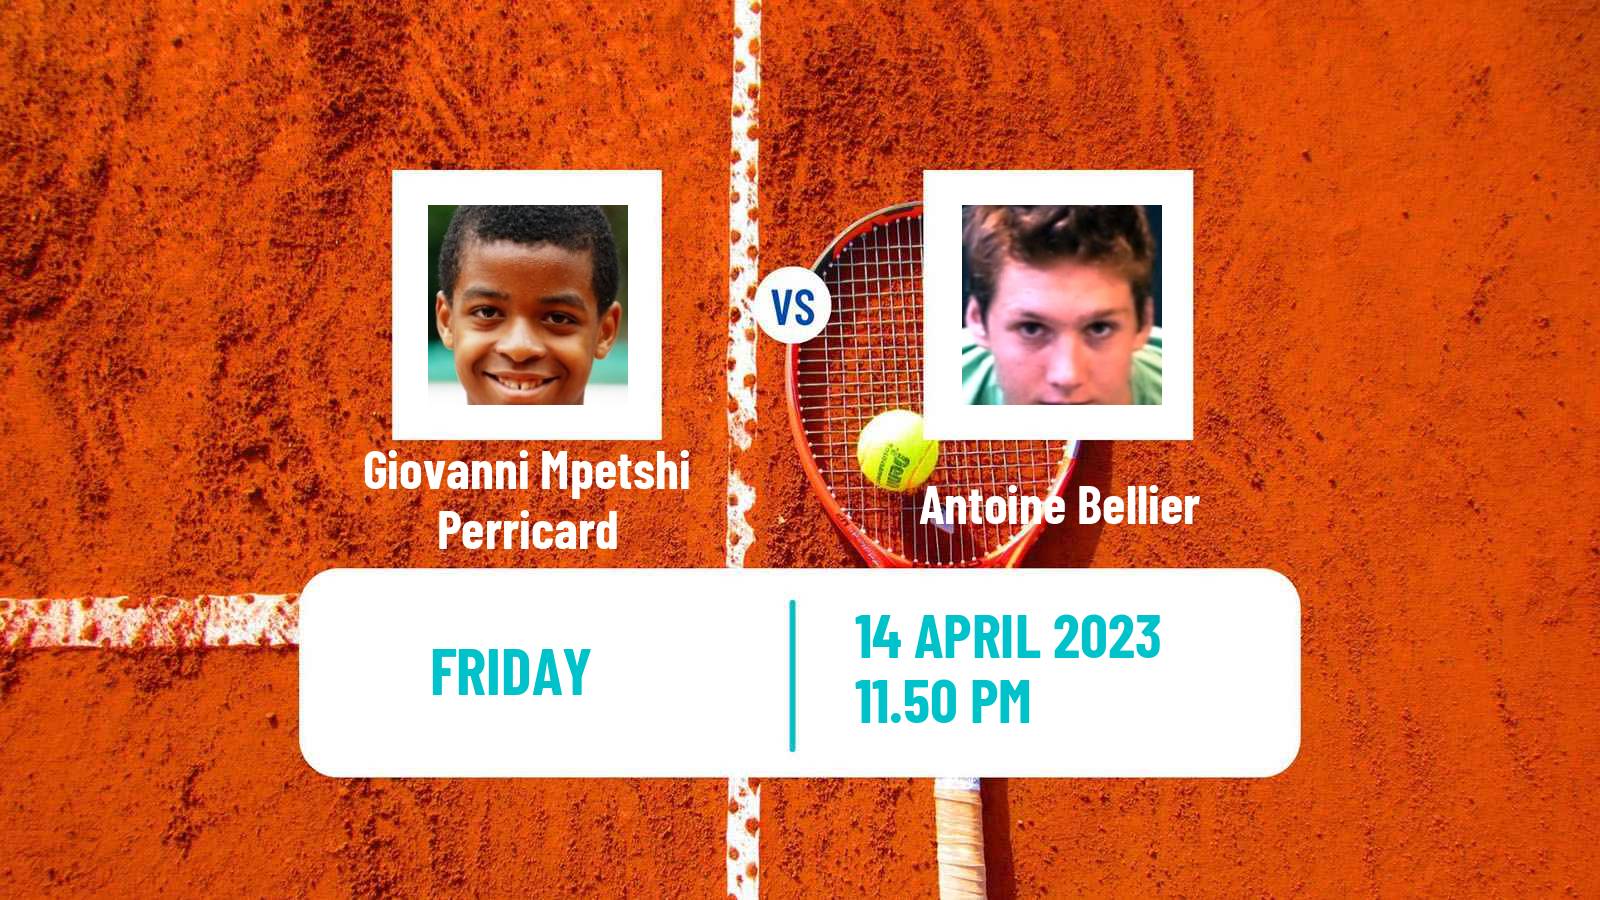 Tennis ATP Challenger Giovanni Mpetshi Perricard - Antoine Bellier